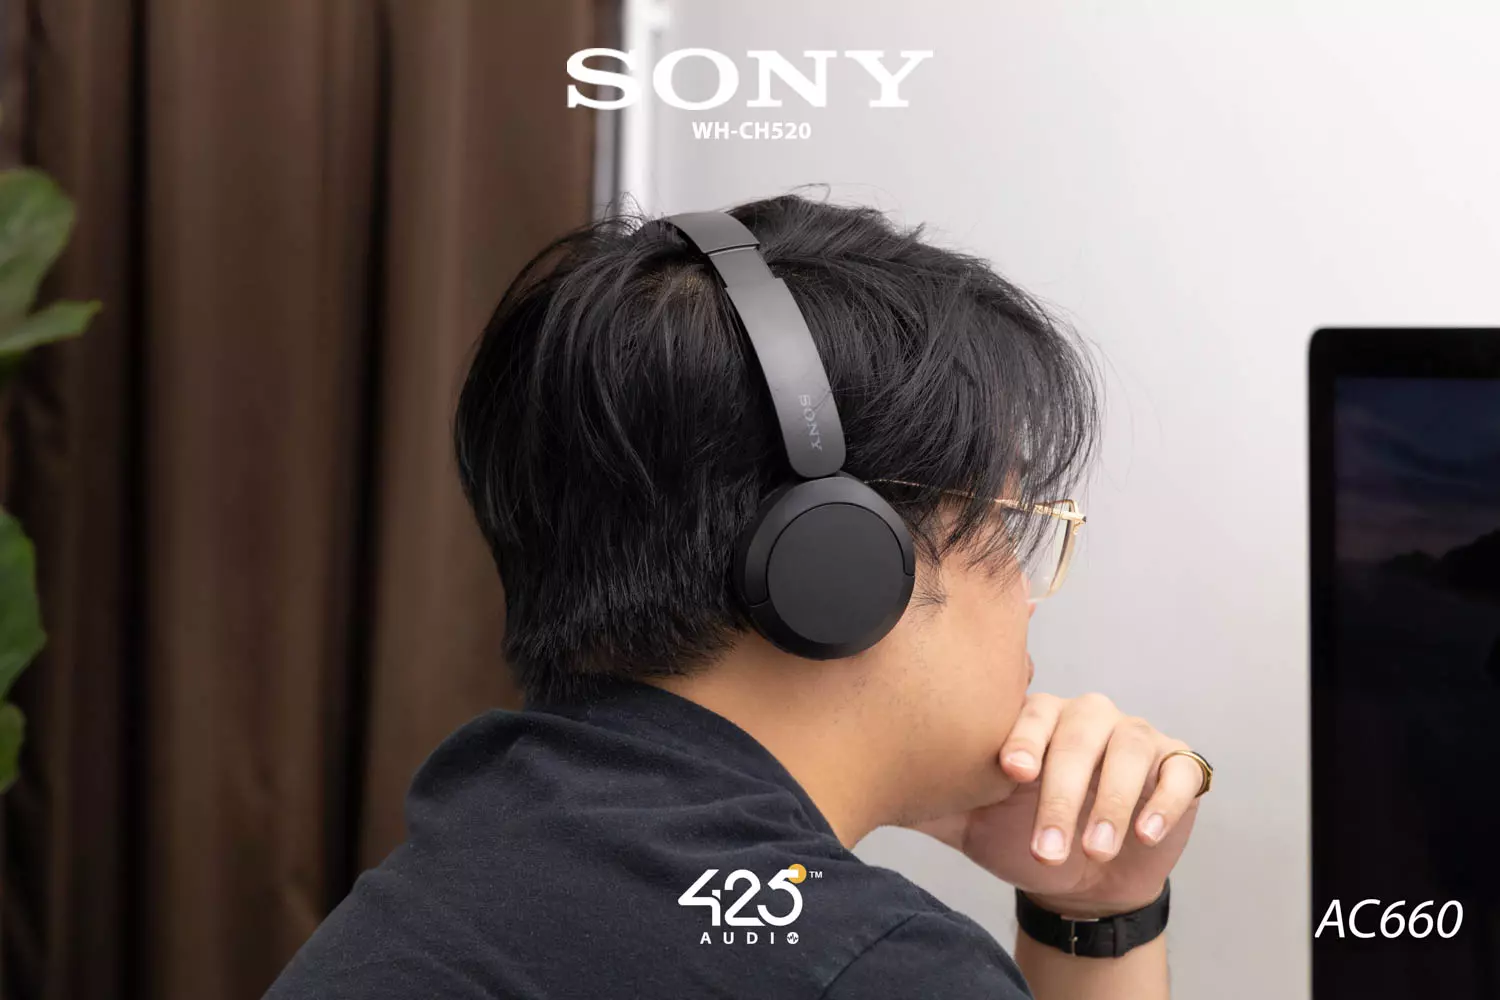 Sony Wireless Headphone WH-CH520 รีวิวชัด คัดของดี สั่งง่าย ส่งไว  ได้ของชัวร์